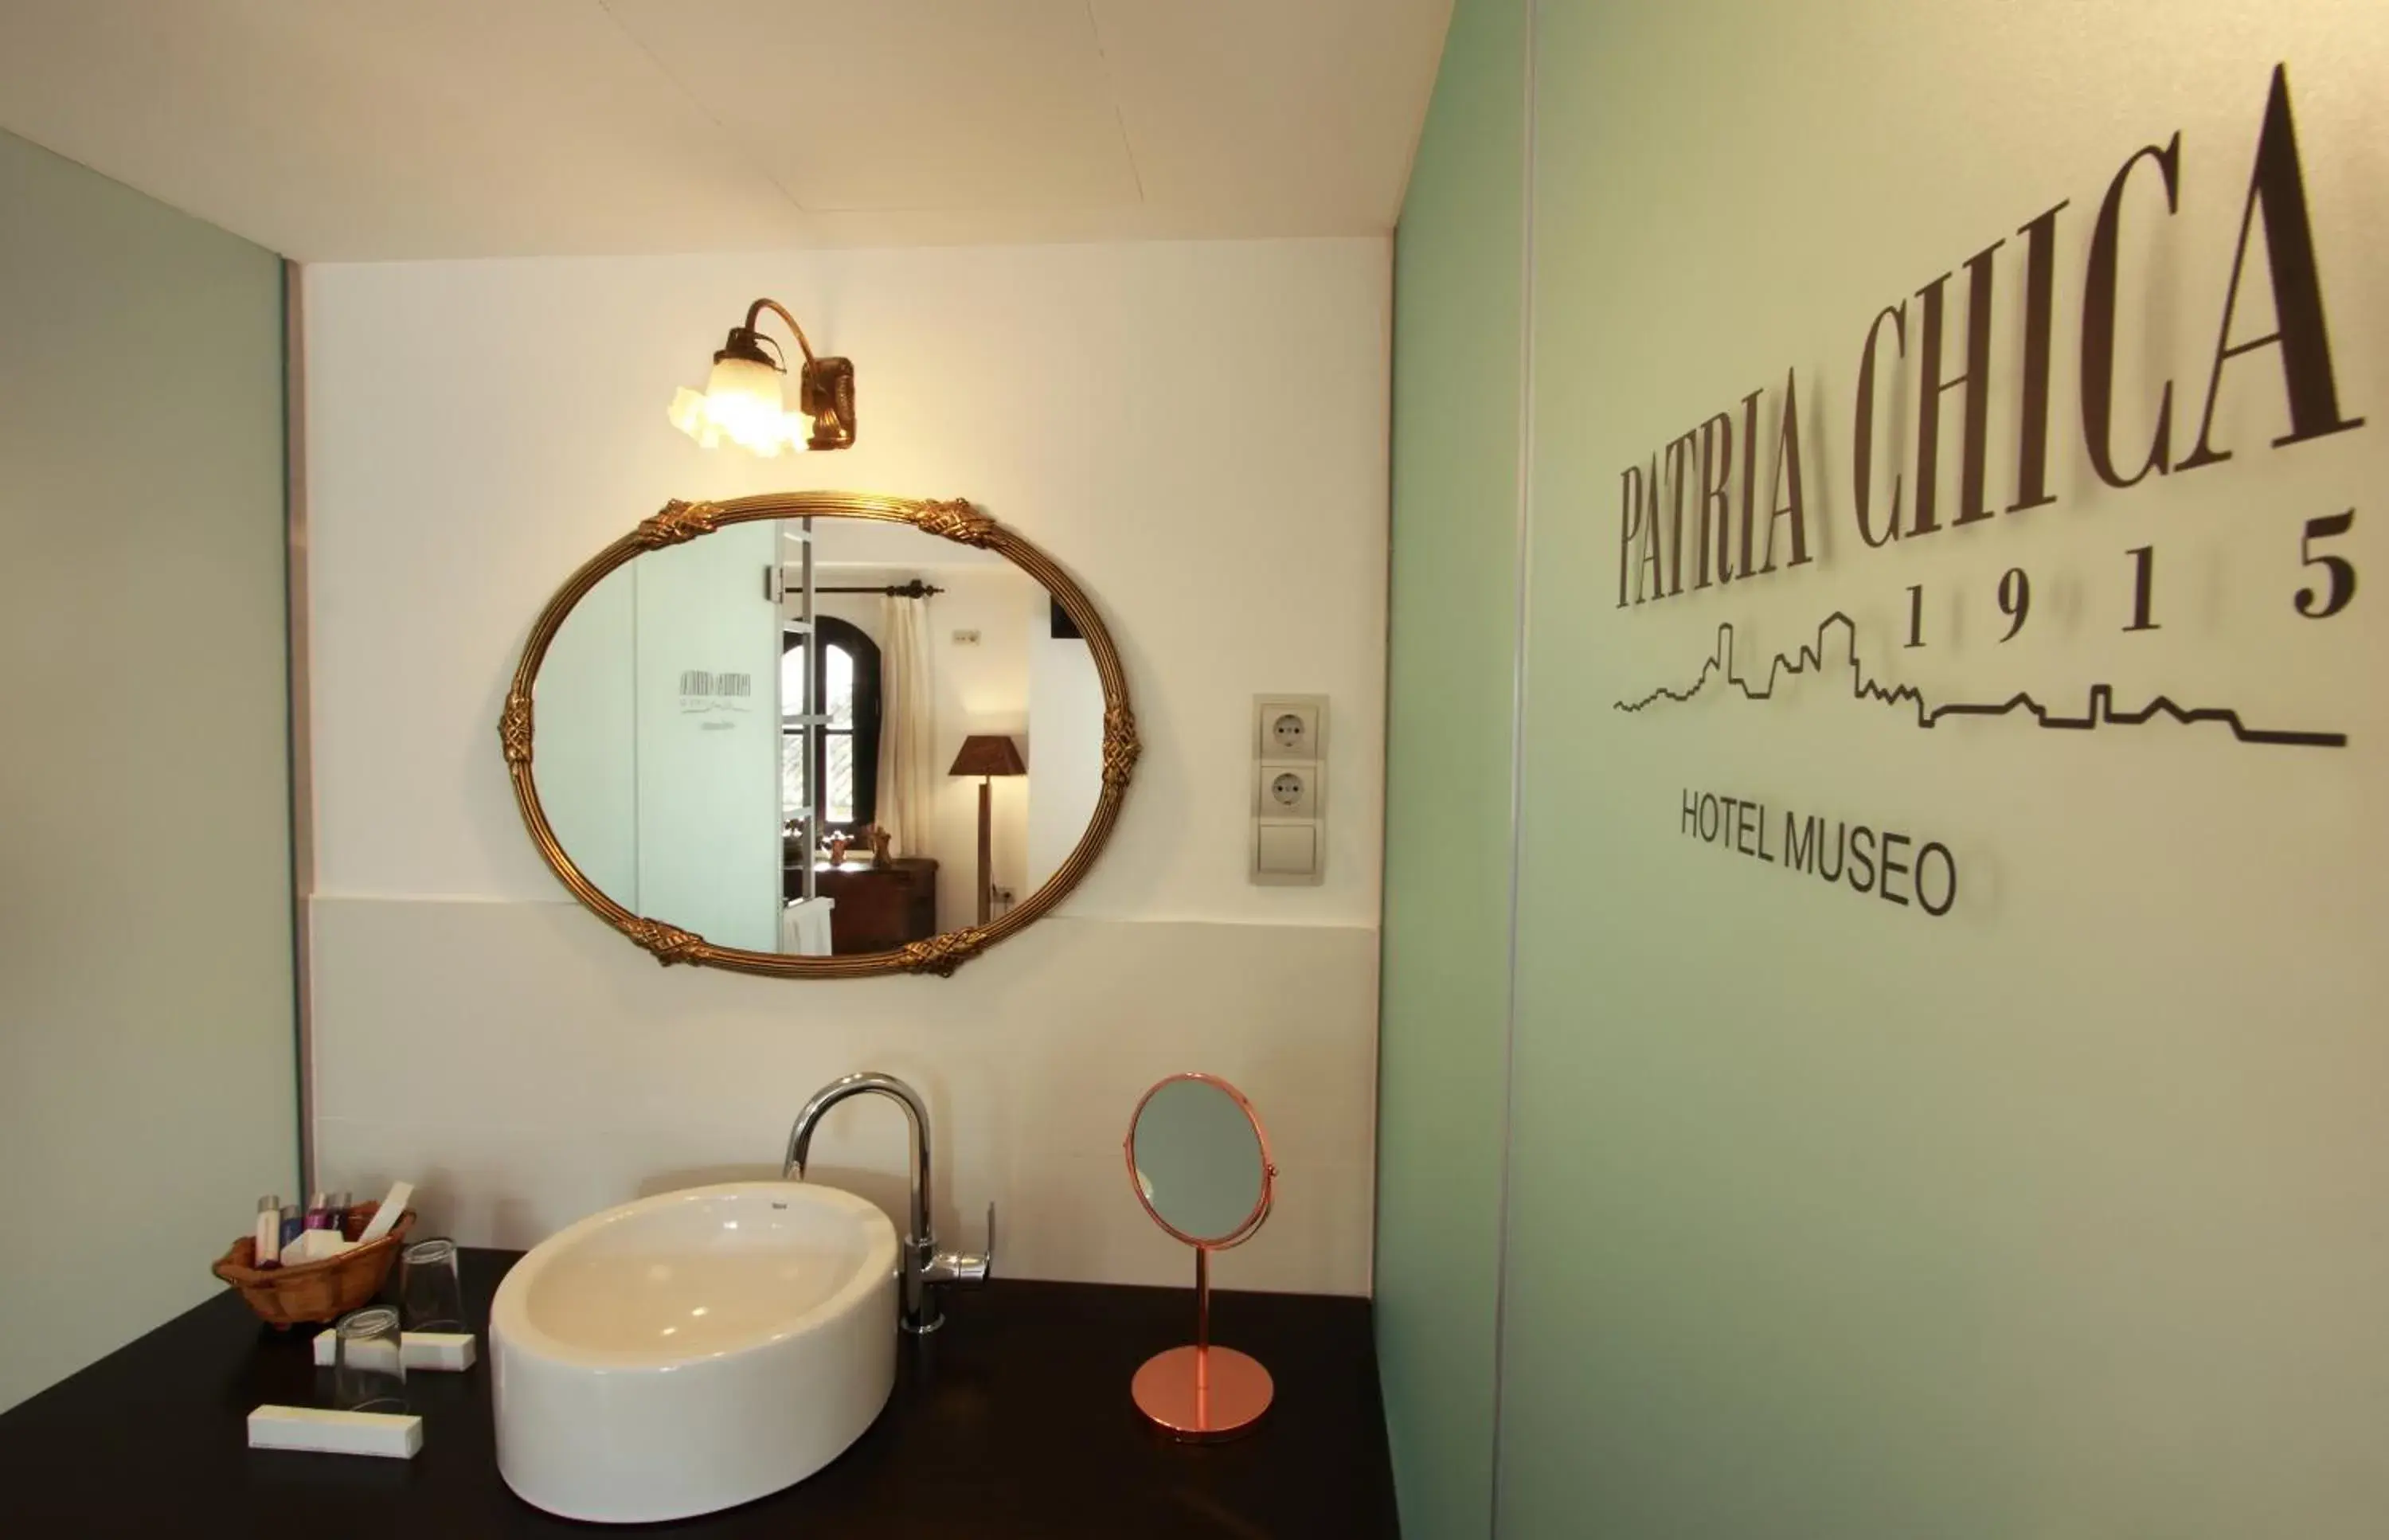 Bathroom in Hotel Patria Chica